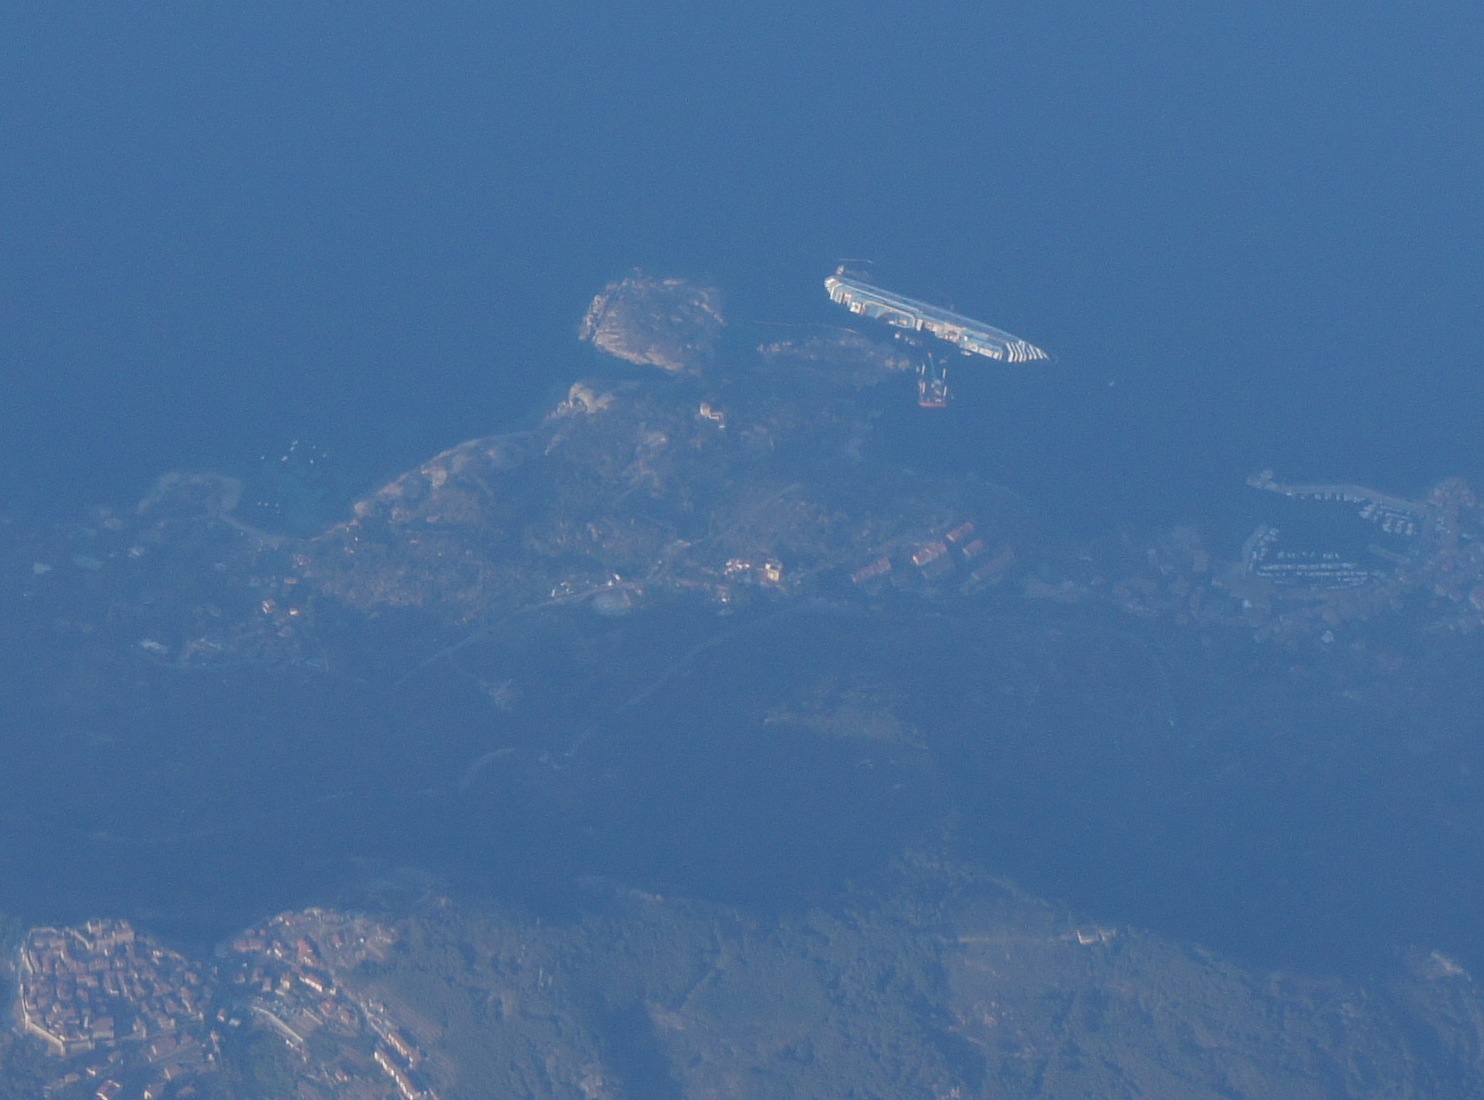 Costa Concordia View from plane